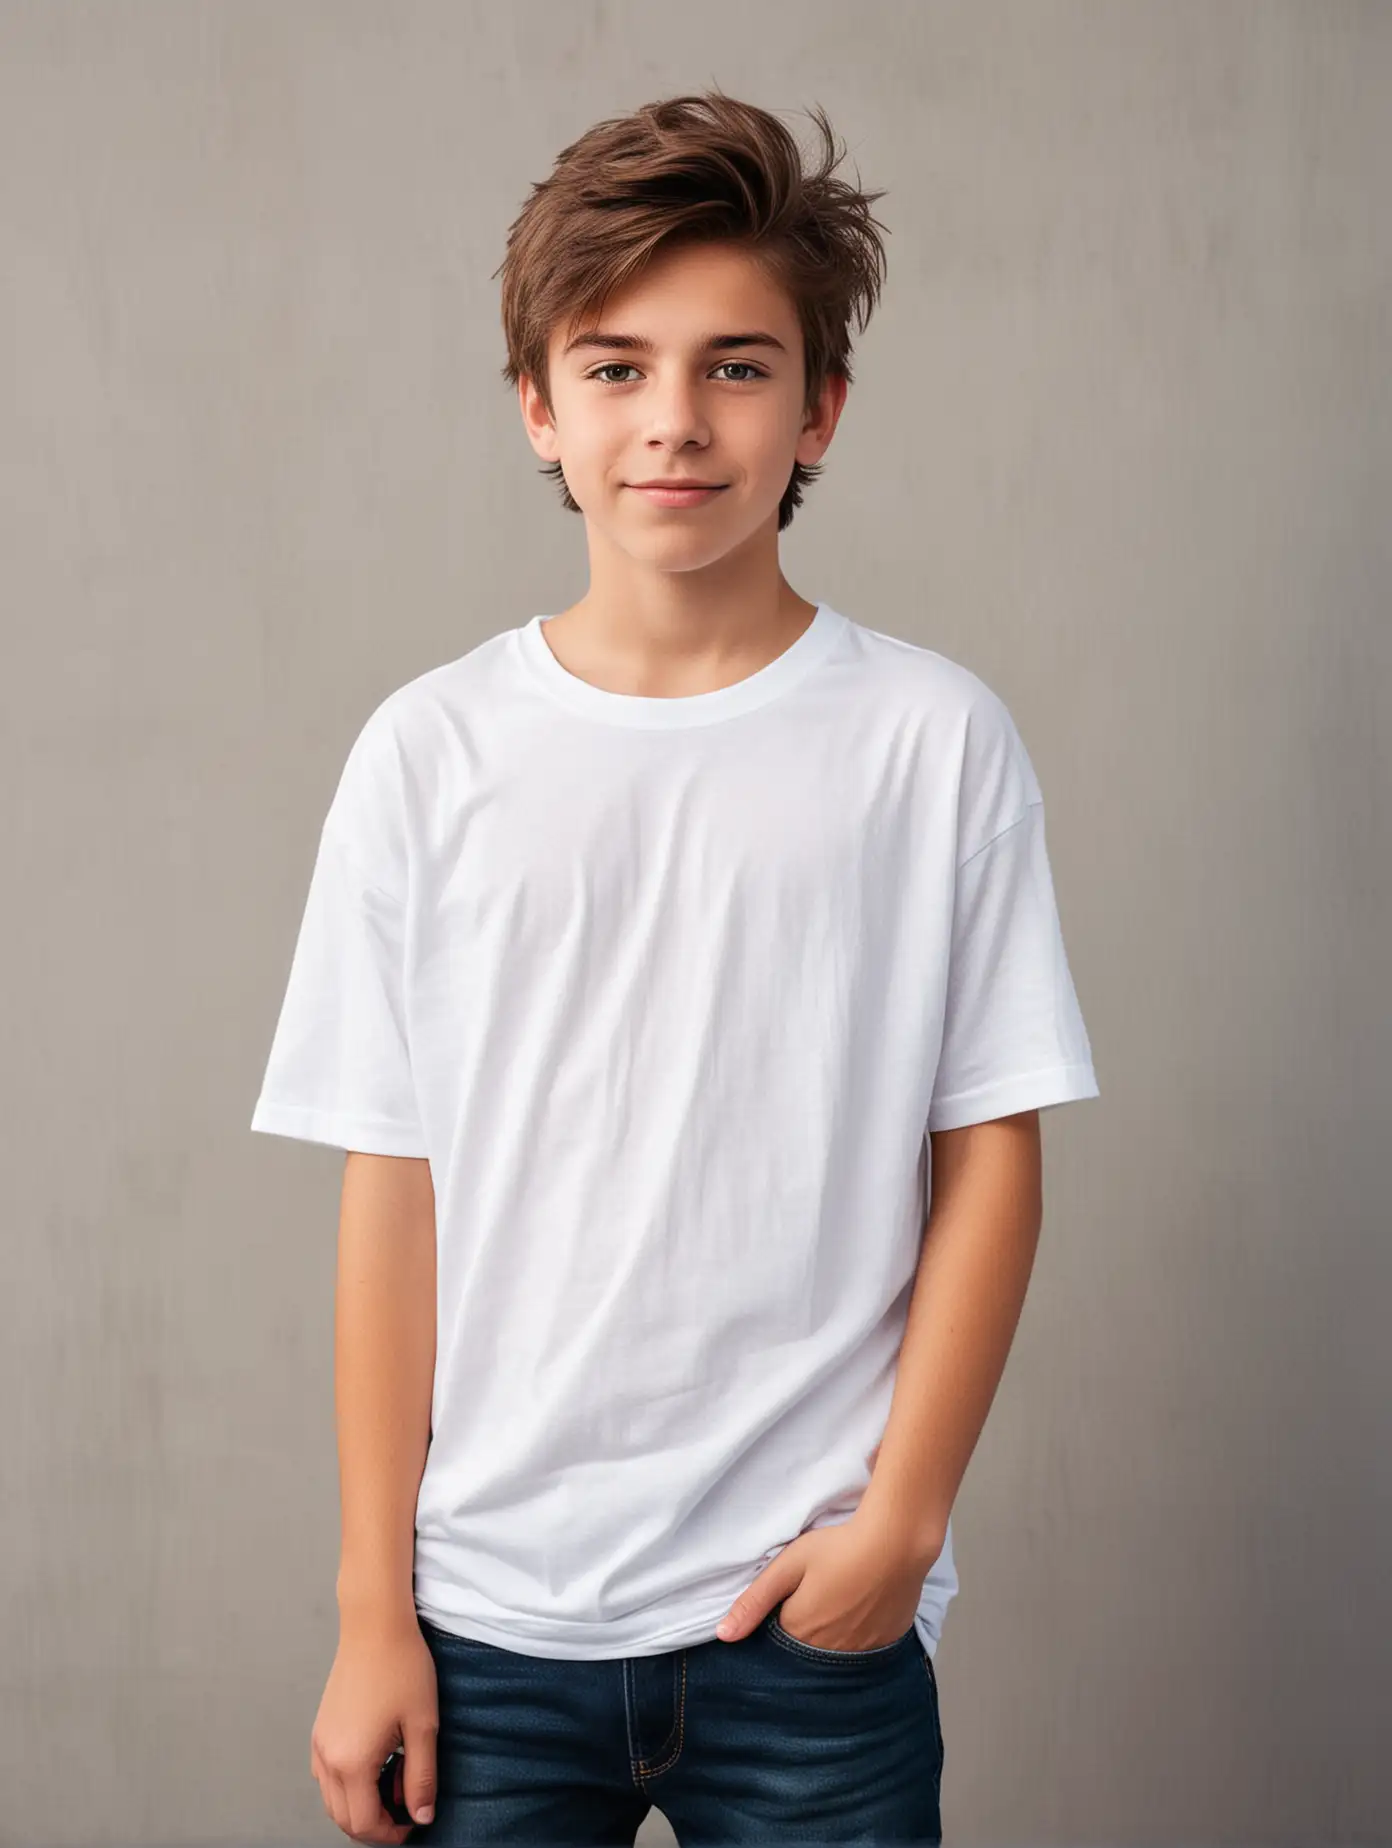 Stylish Teenage Boy in Casual White TShirt